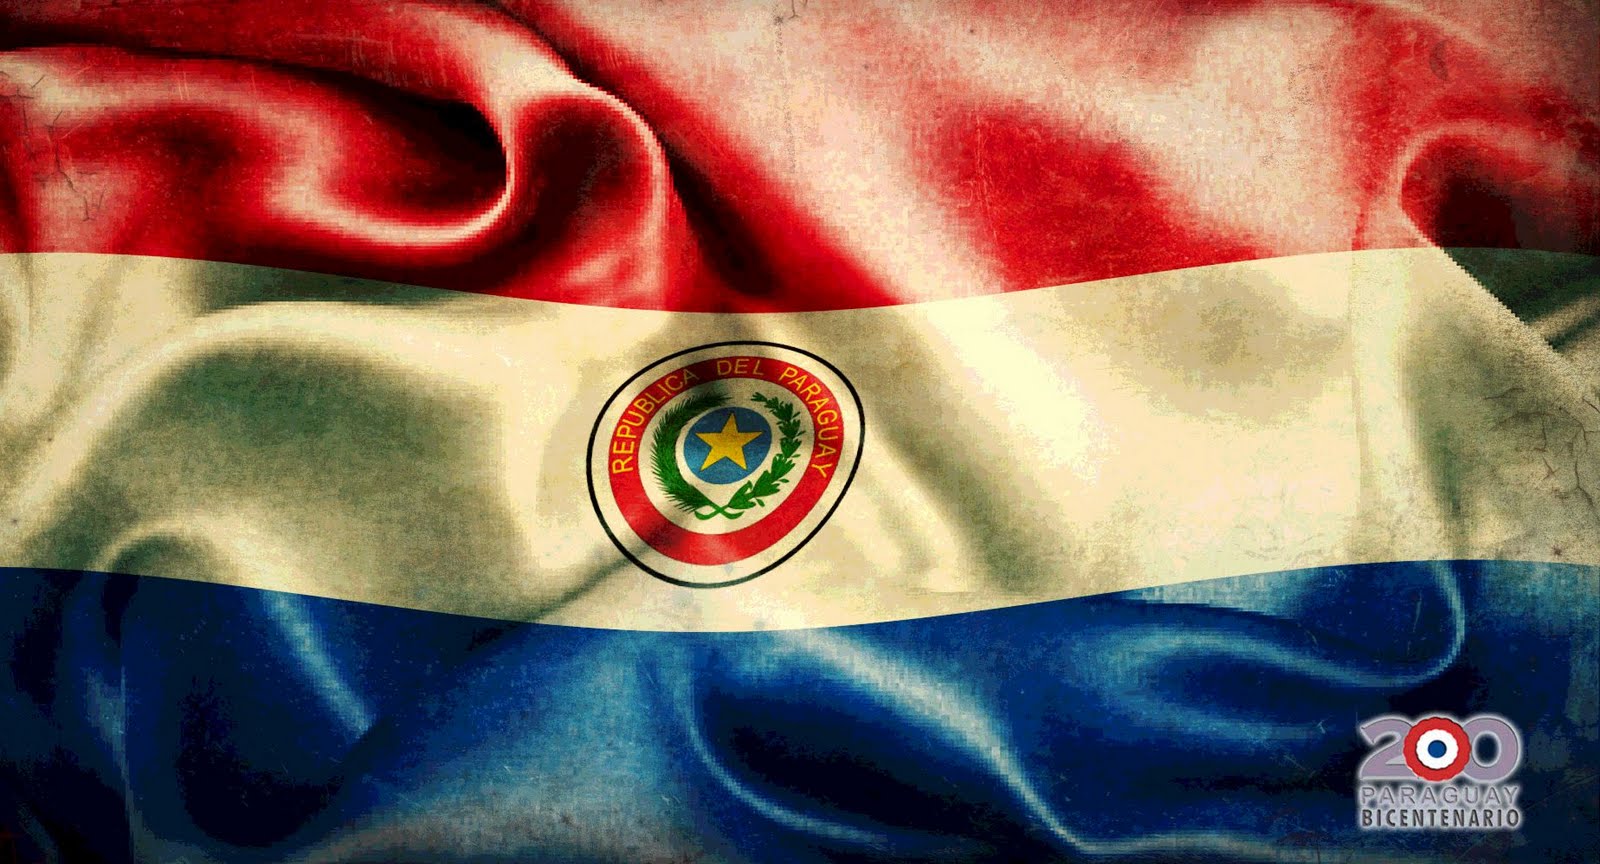 http://2.bp.blogspot.com/-MYpdHjyeBQc/Tc4OBKt7aoI/AAAAAAAABQ0/D58i9MpIk2c/s1600/bandera_paraguay_logo_bicentenario_fondo_pantalla.jpg